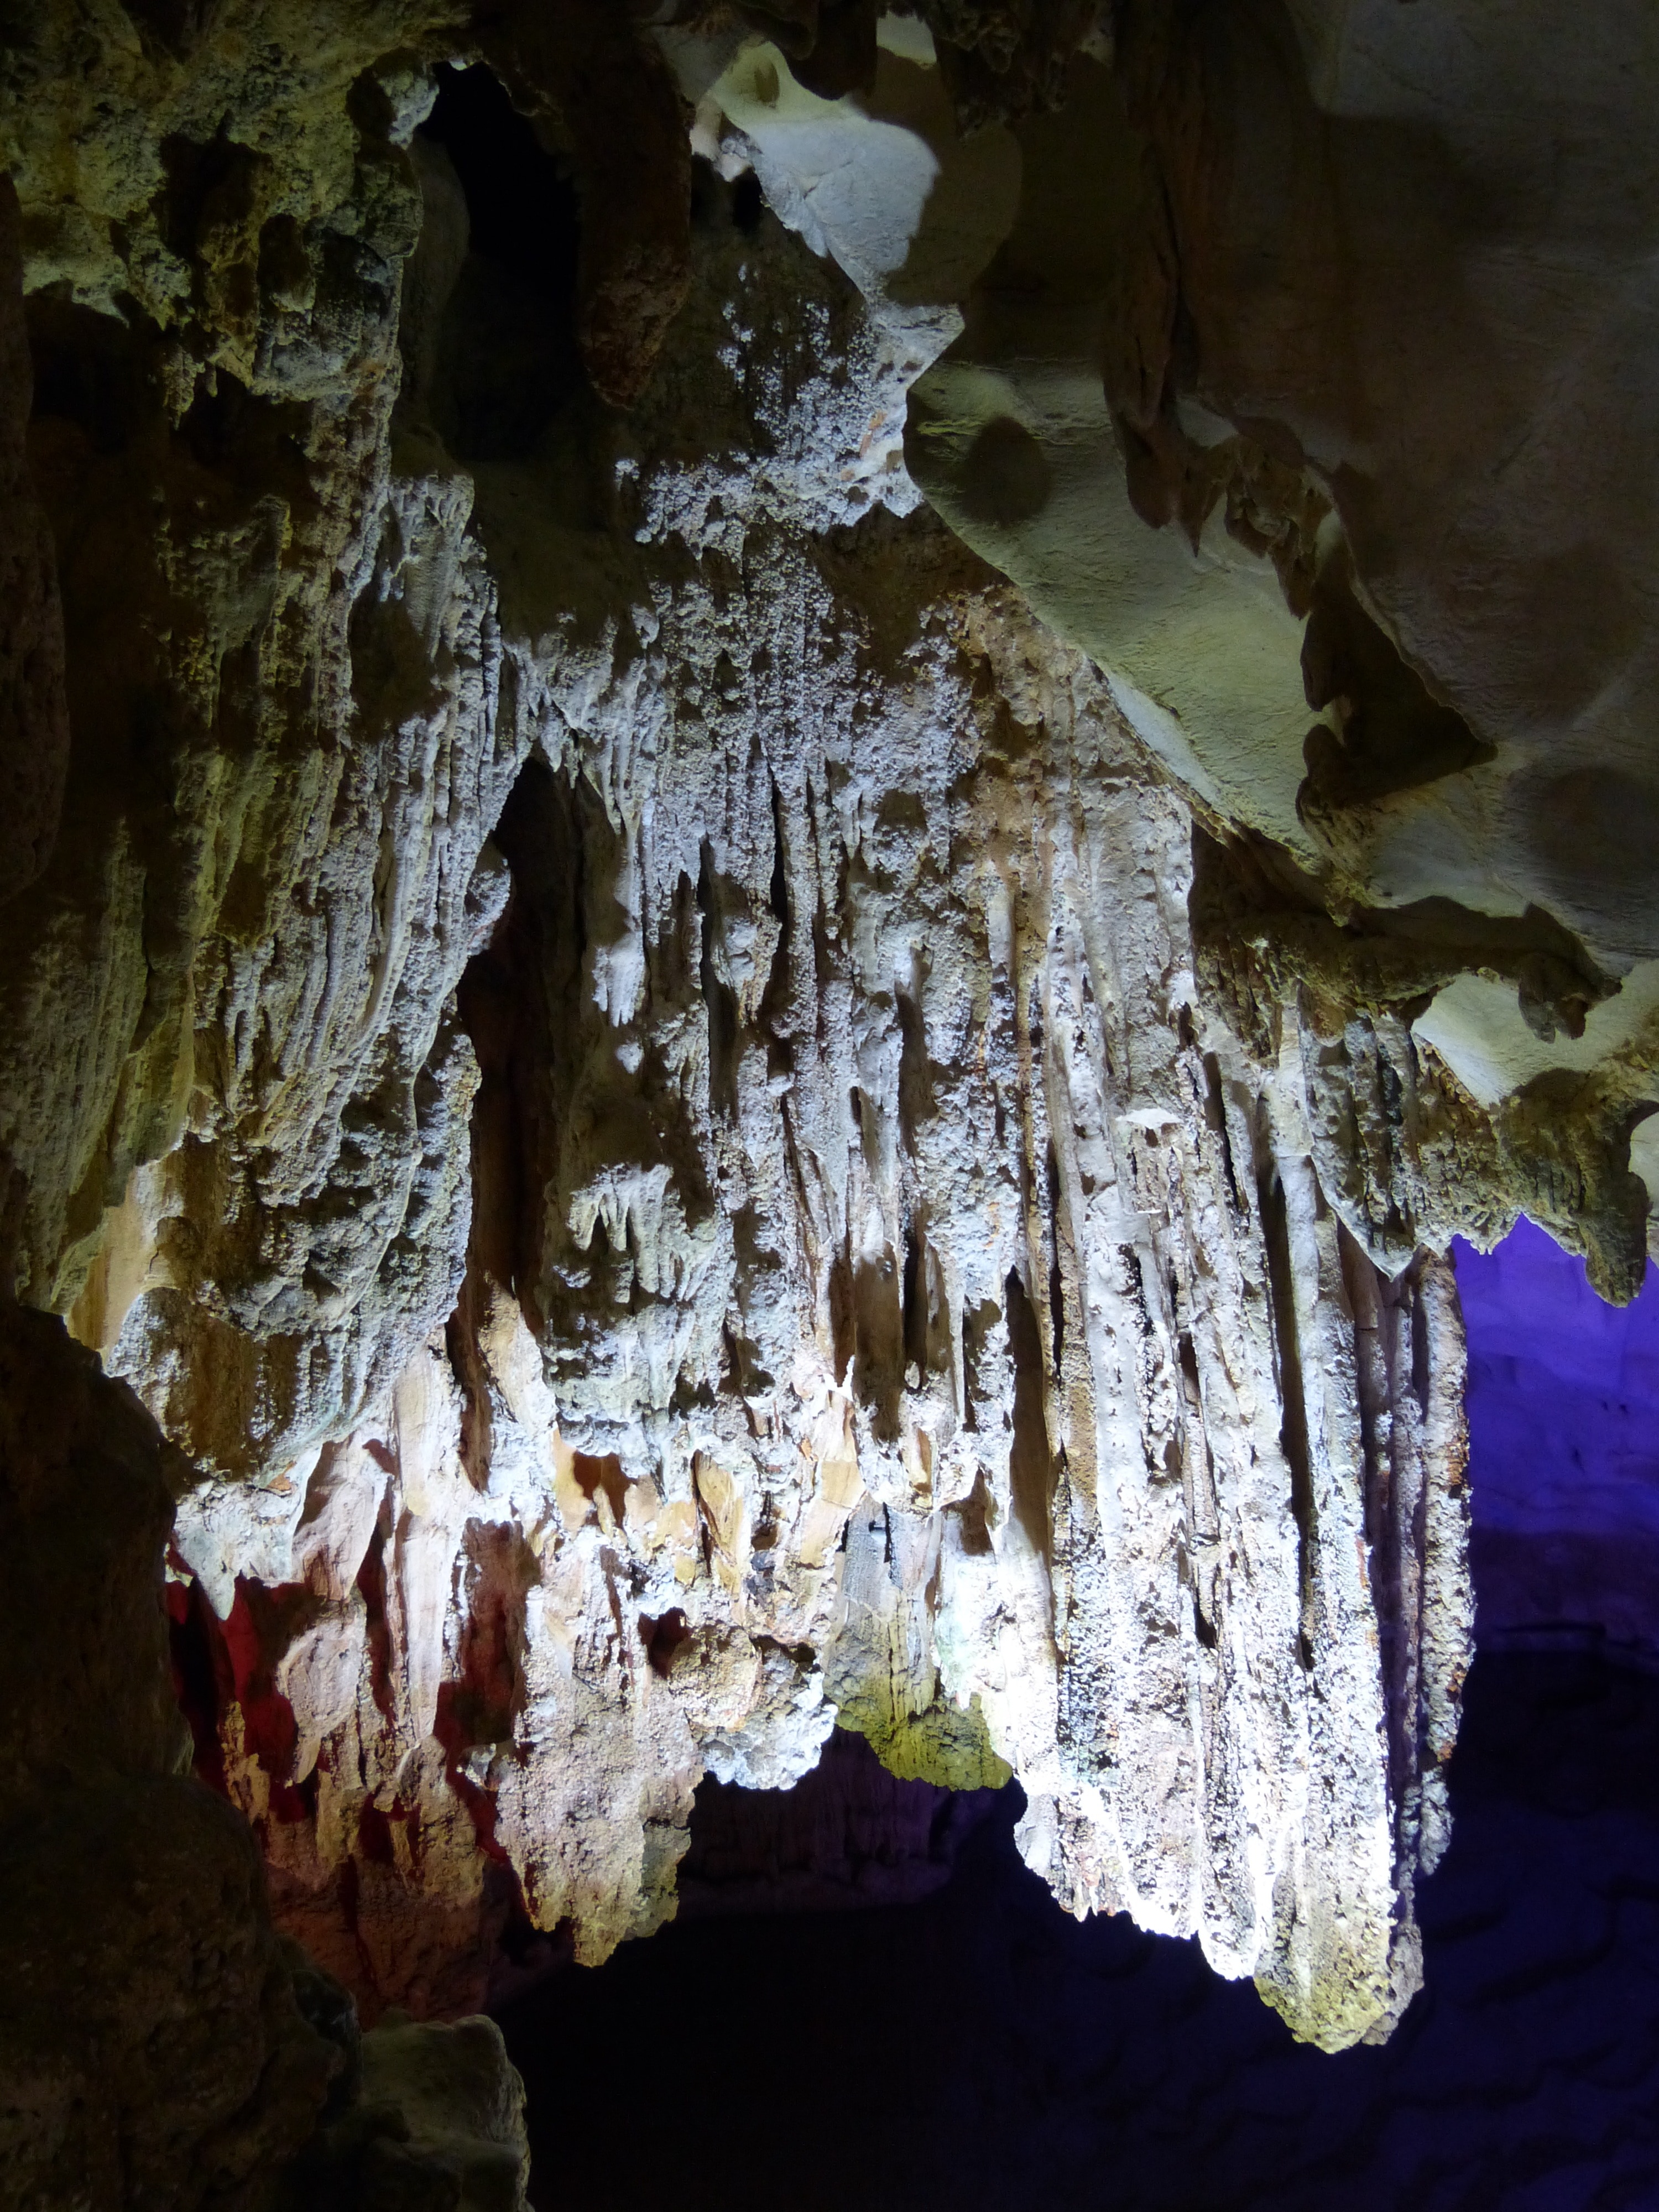 close up of stalagmites inside cave